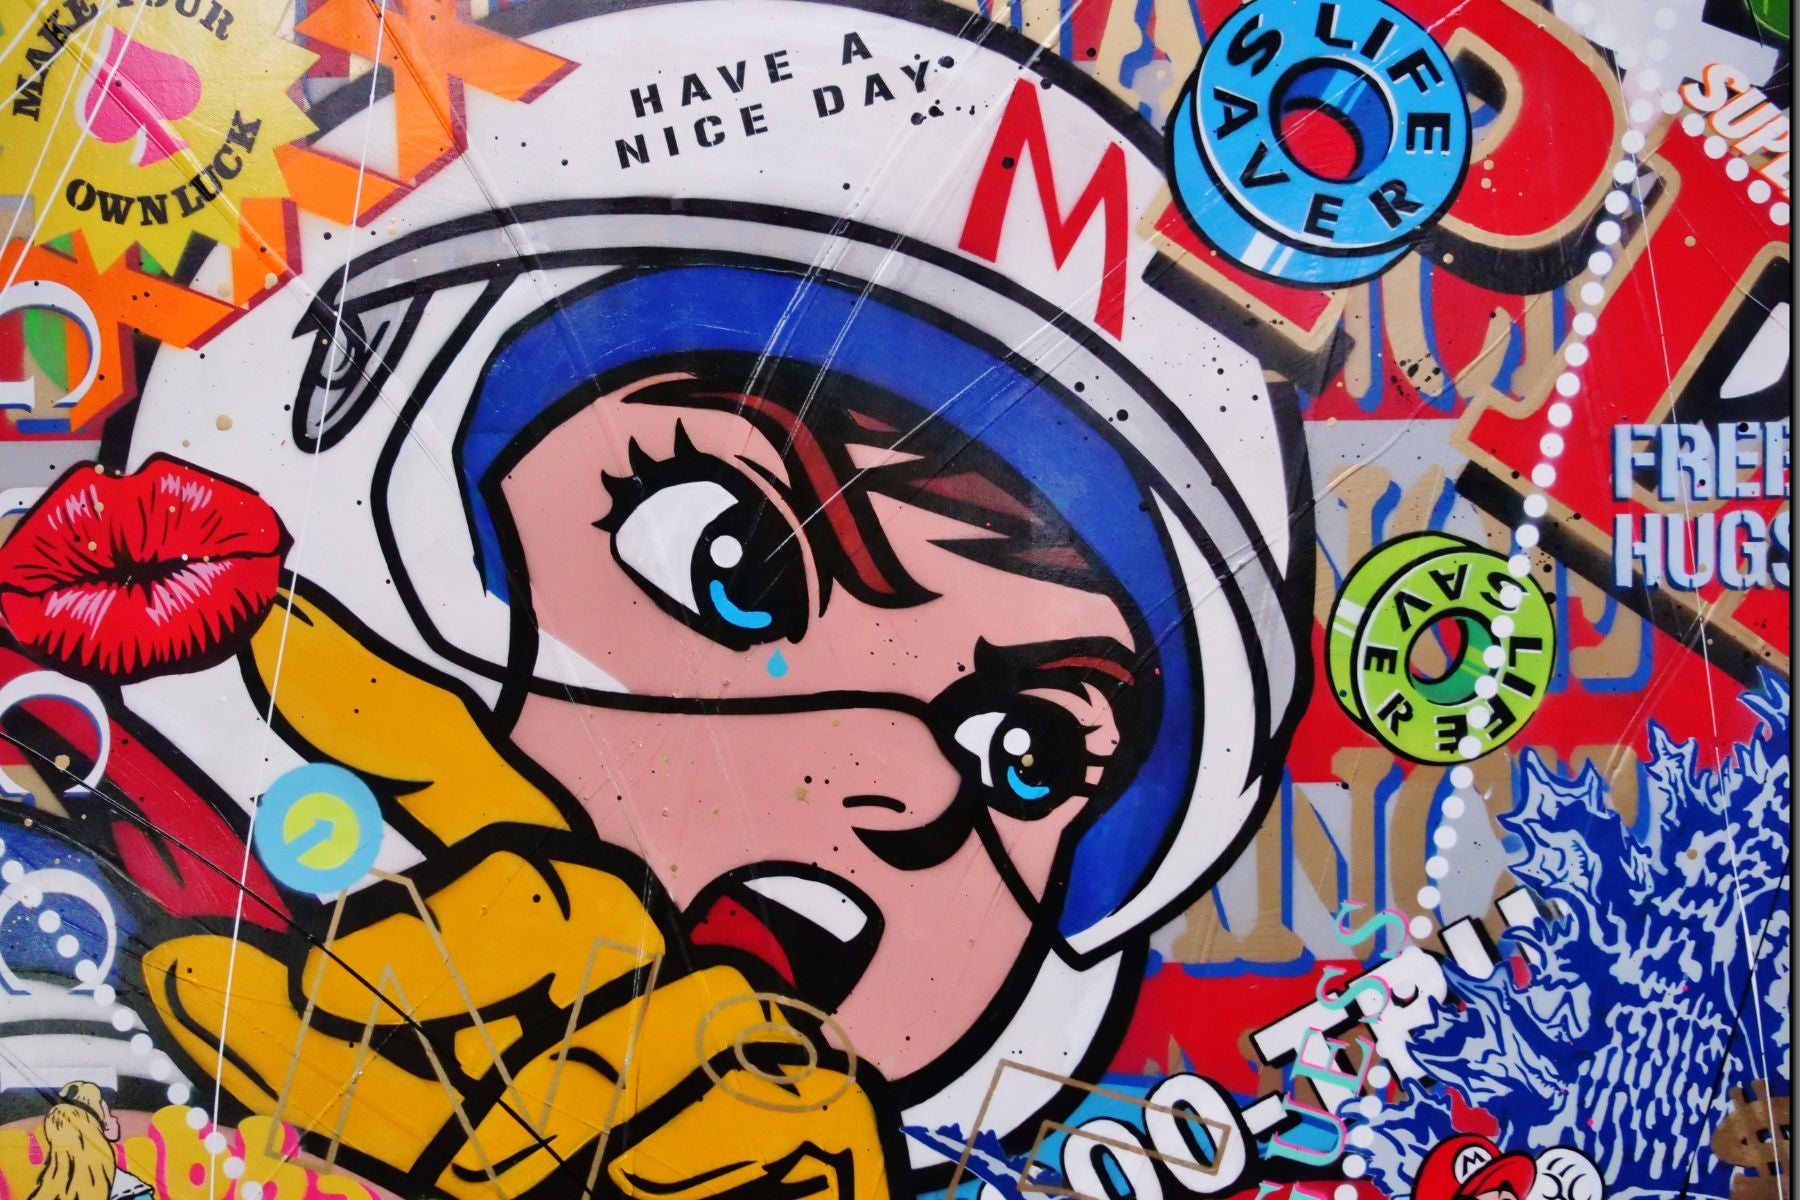 Speeding thru life 240cm x 100cm Speed Racer Textured Urban Pop Art Painting (SOLD)